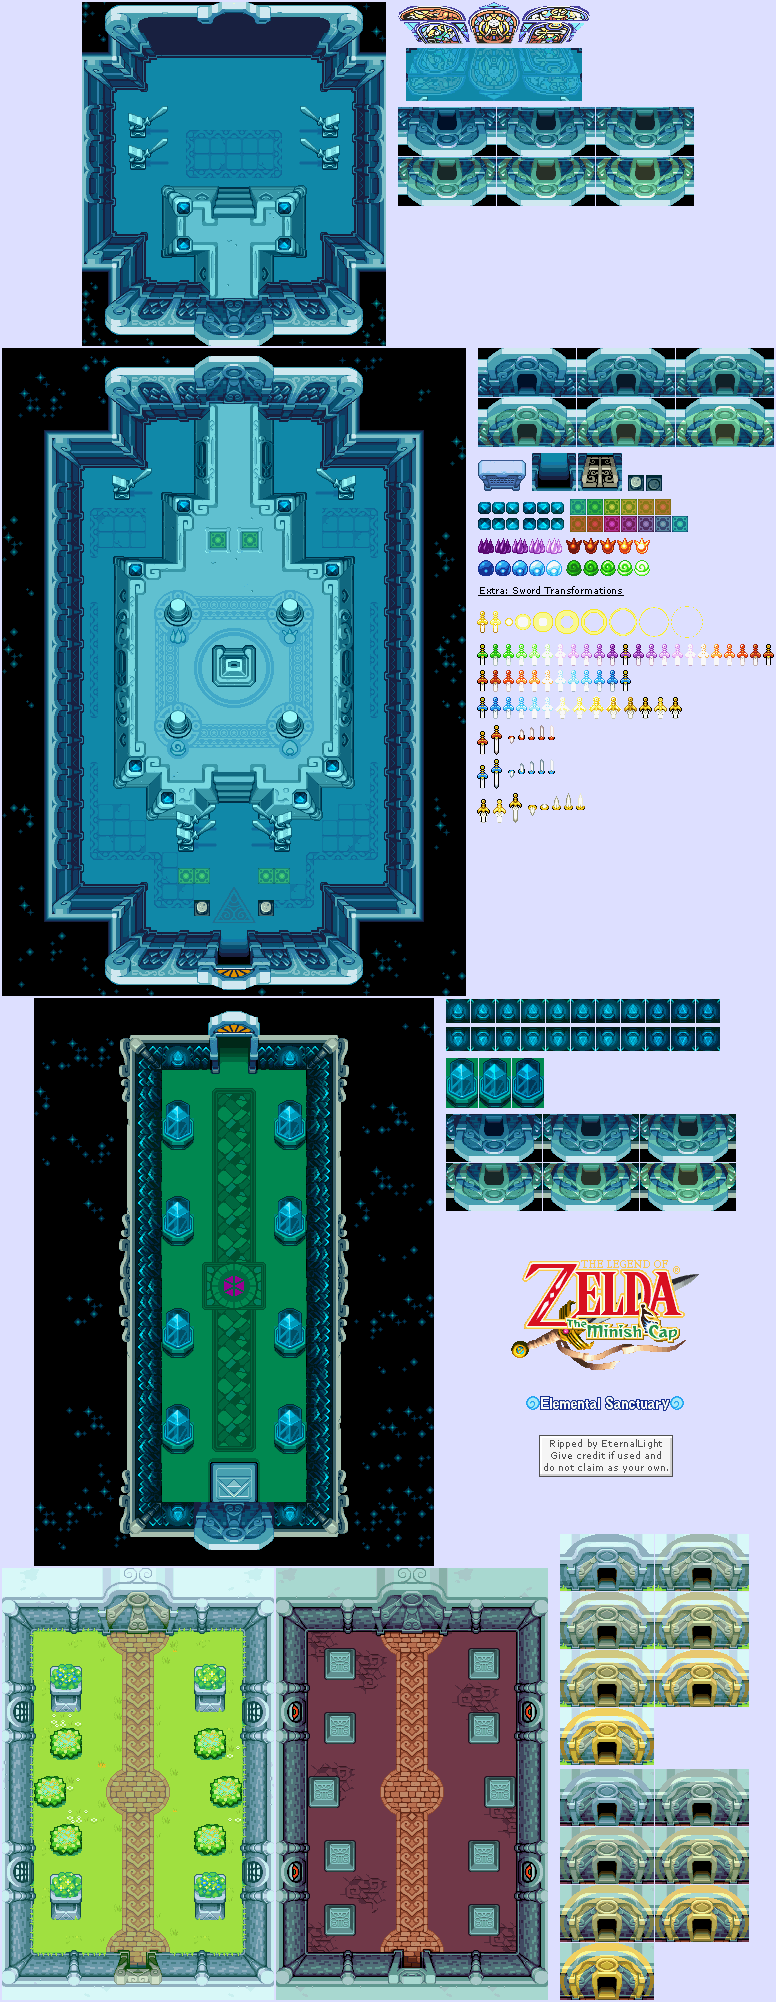 The Legend of Zelda: The Minish Cap - Elemental Sanctuary